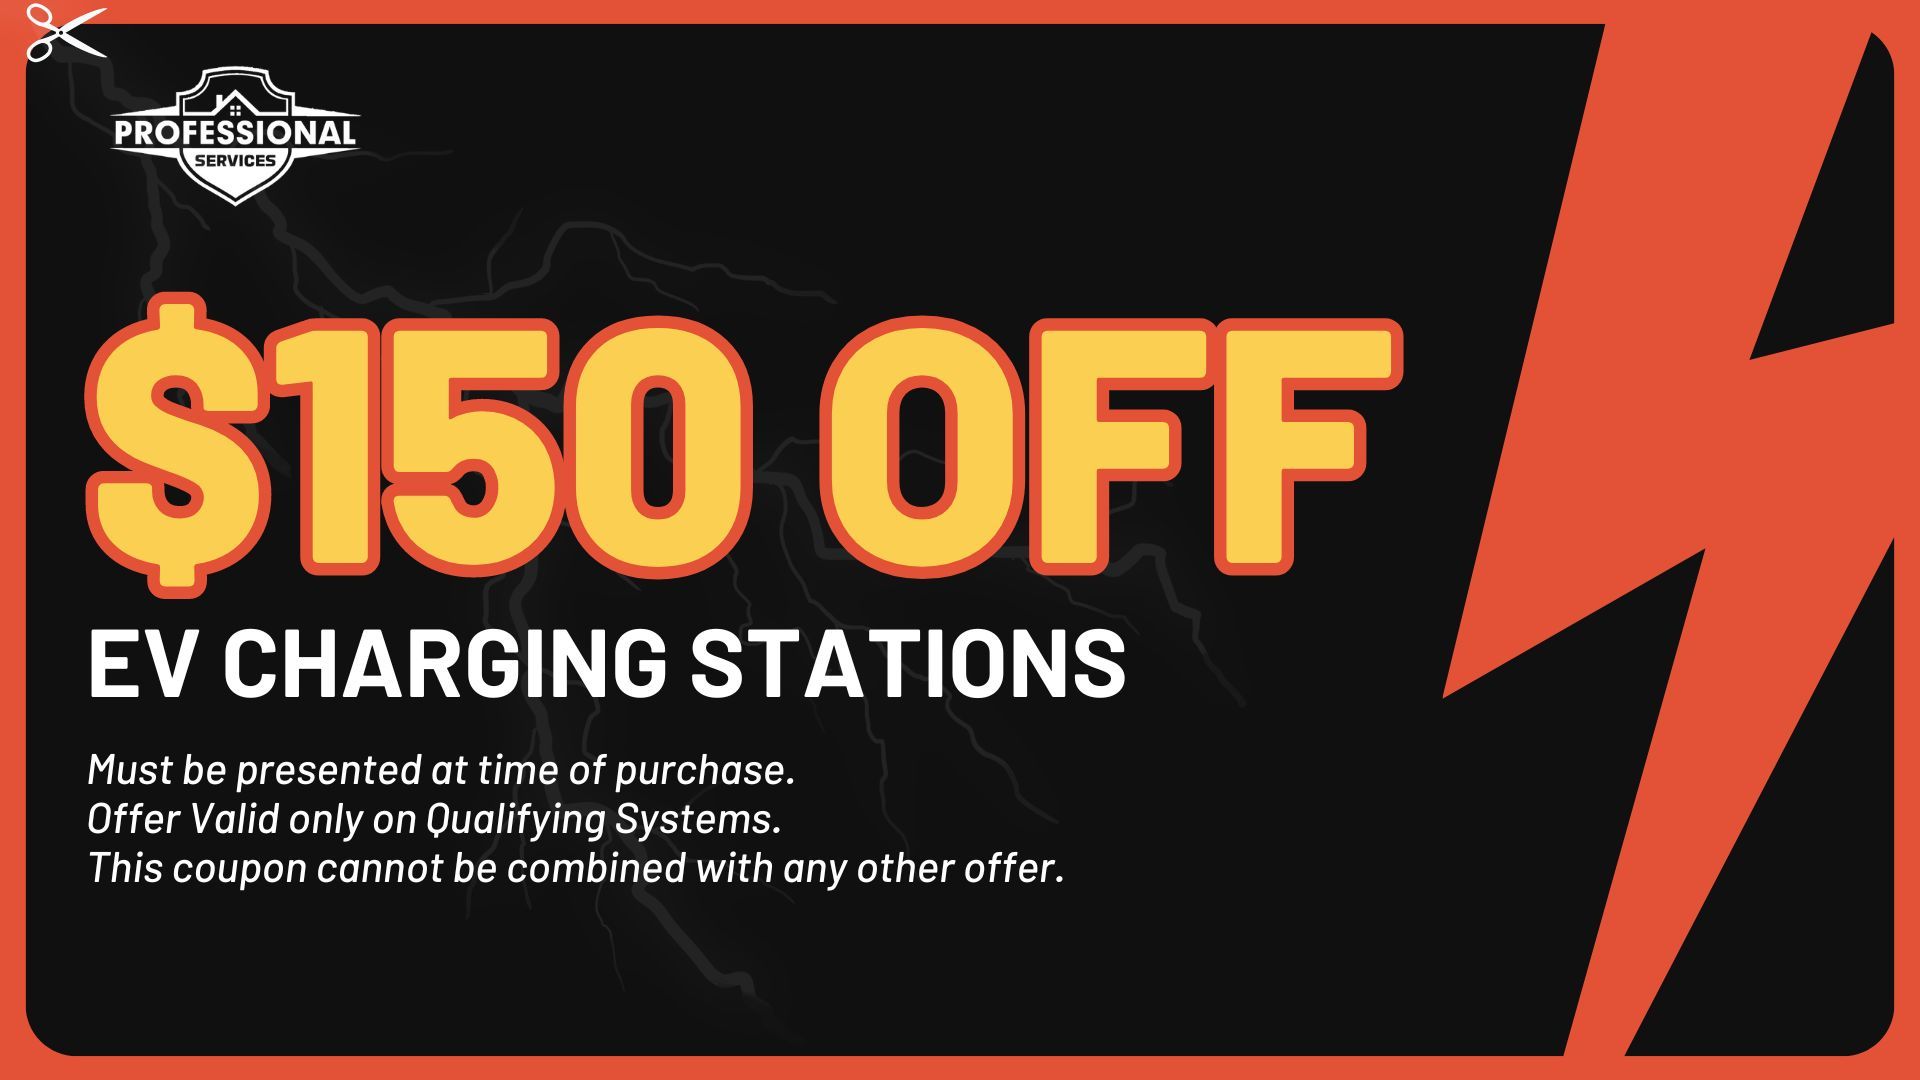 20% OFF EV Charging Stations